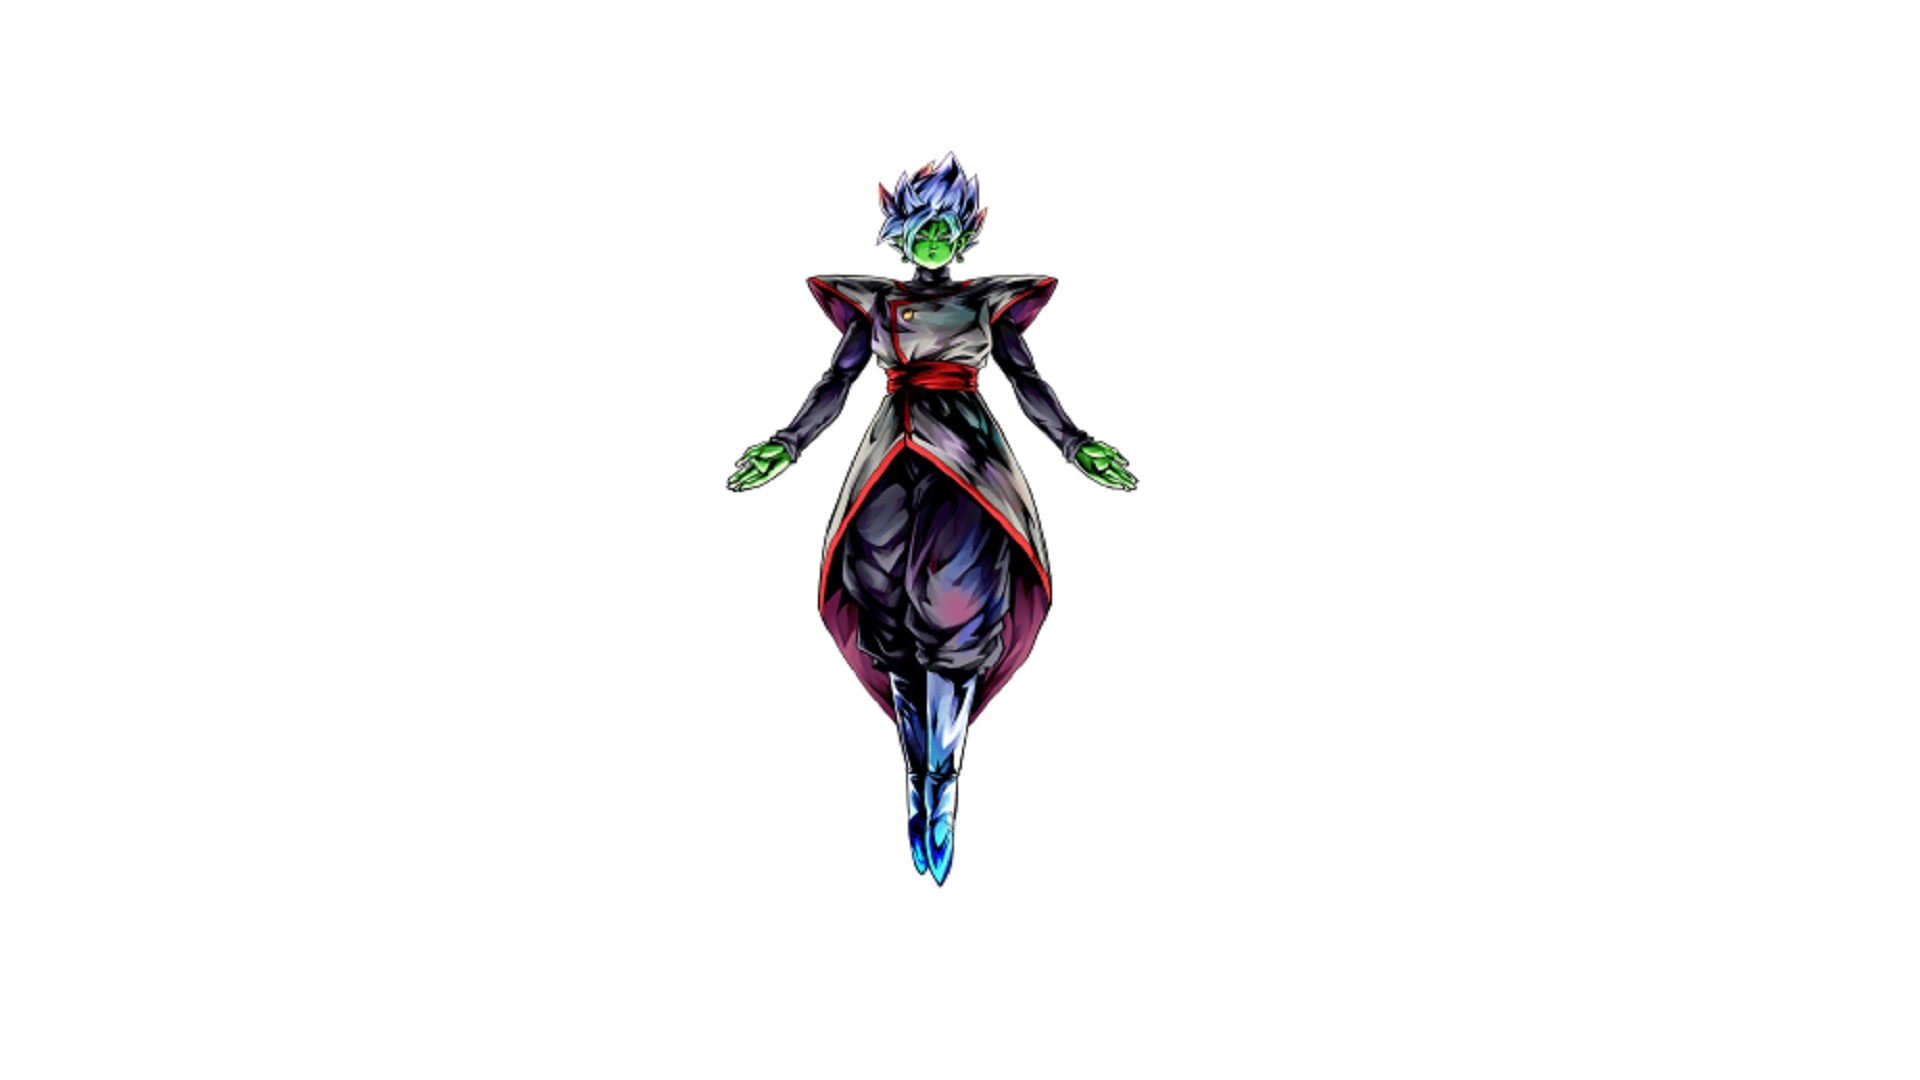 SP Ultra Instinct -Sign- Goku (Purple)